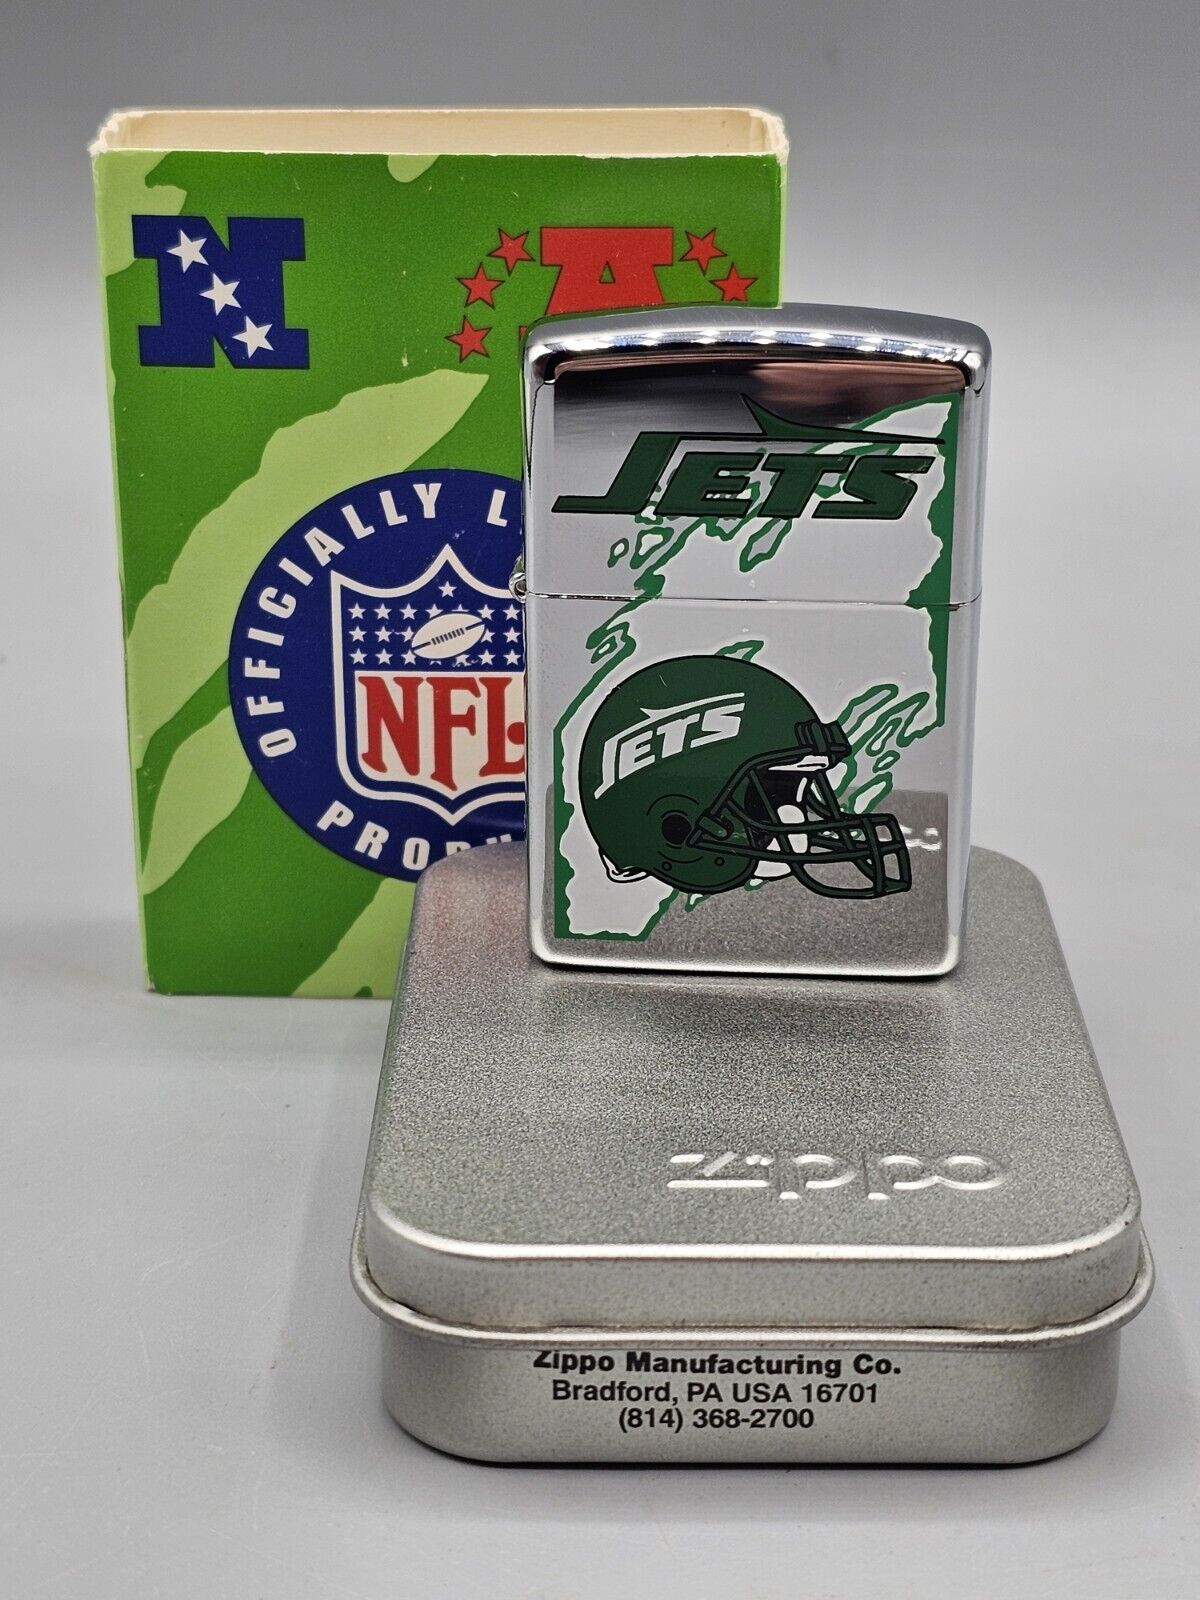 VINTAGE 1997 NFL New York JETS Chrome Zippo Lighter #444 - NEW in PACKAGE 